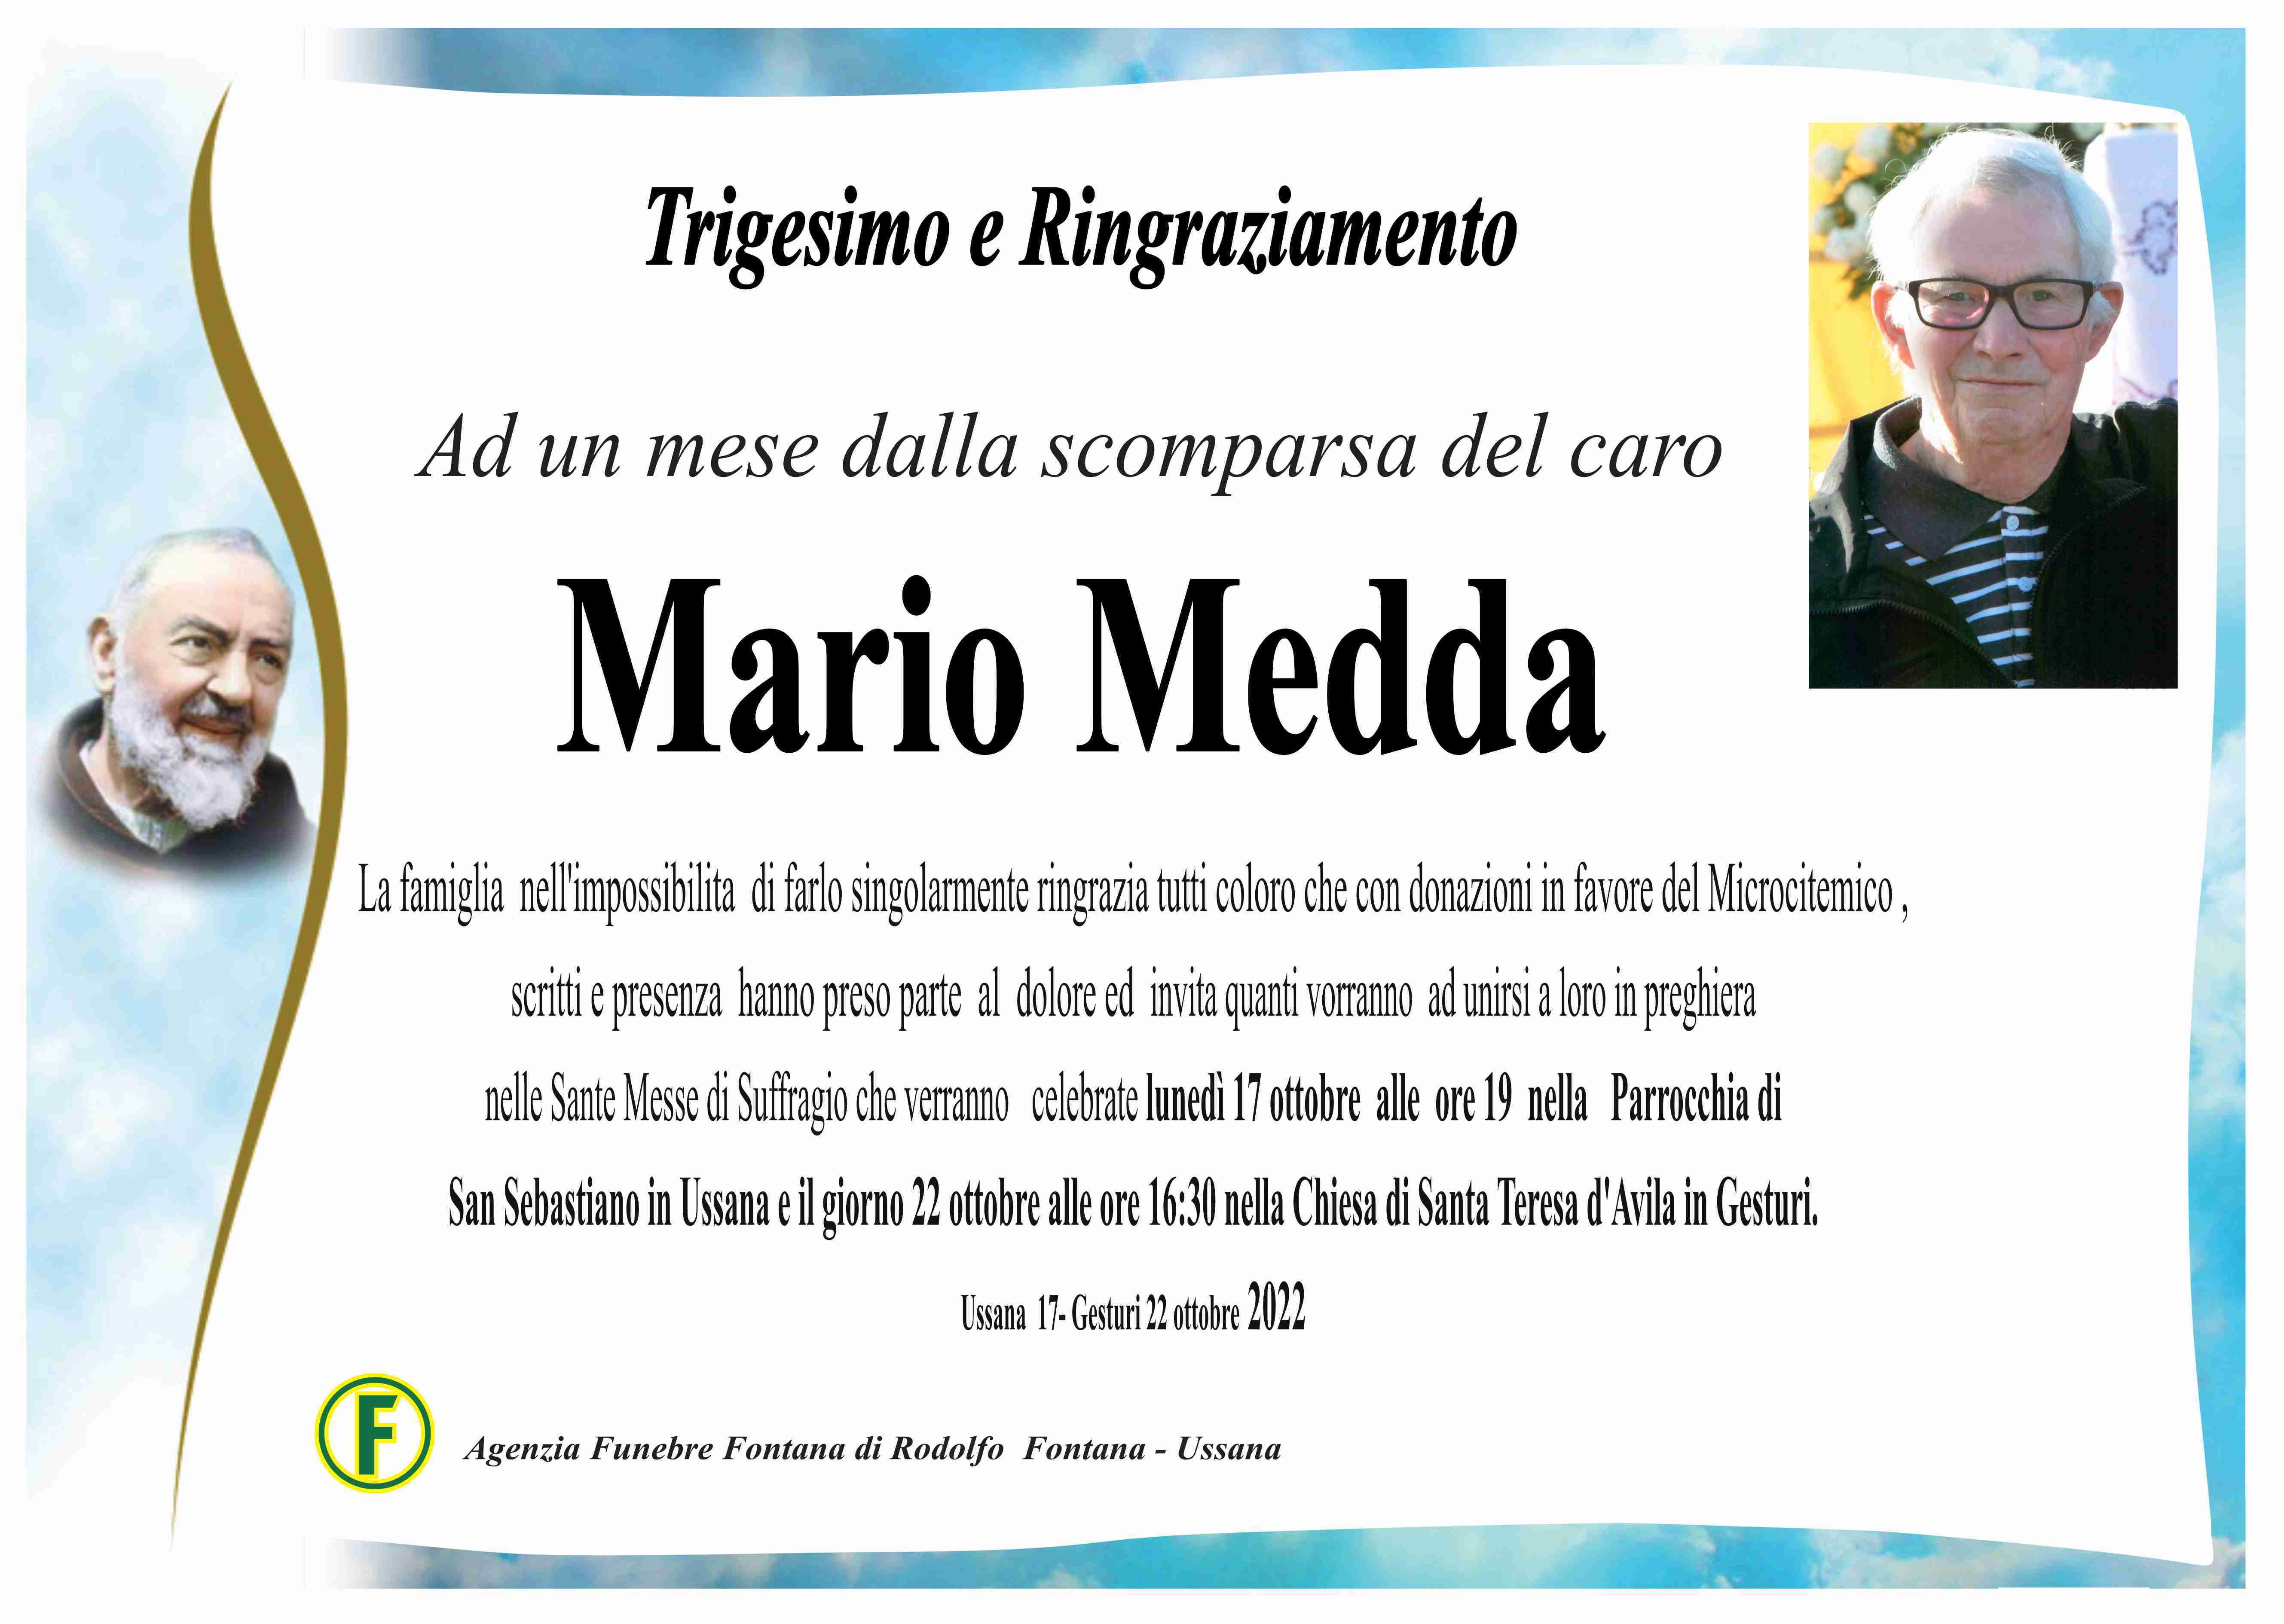 Mario Medda